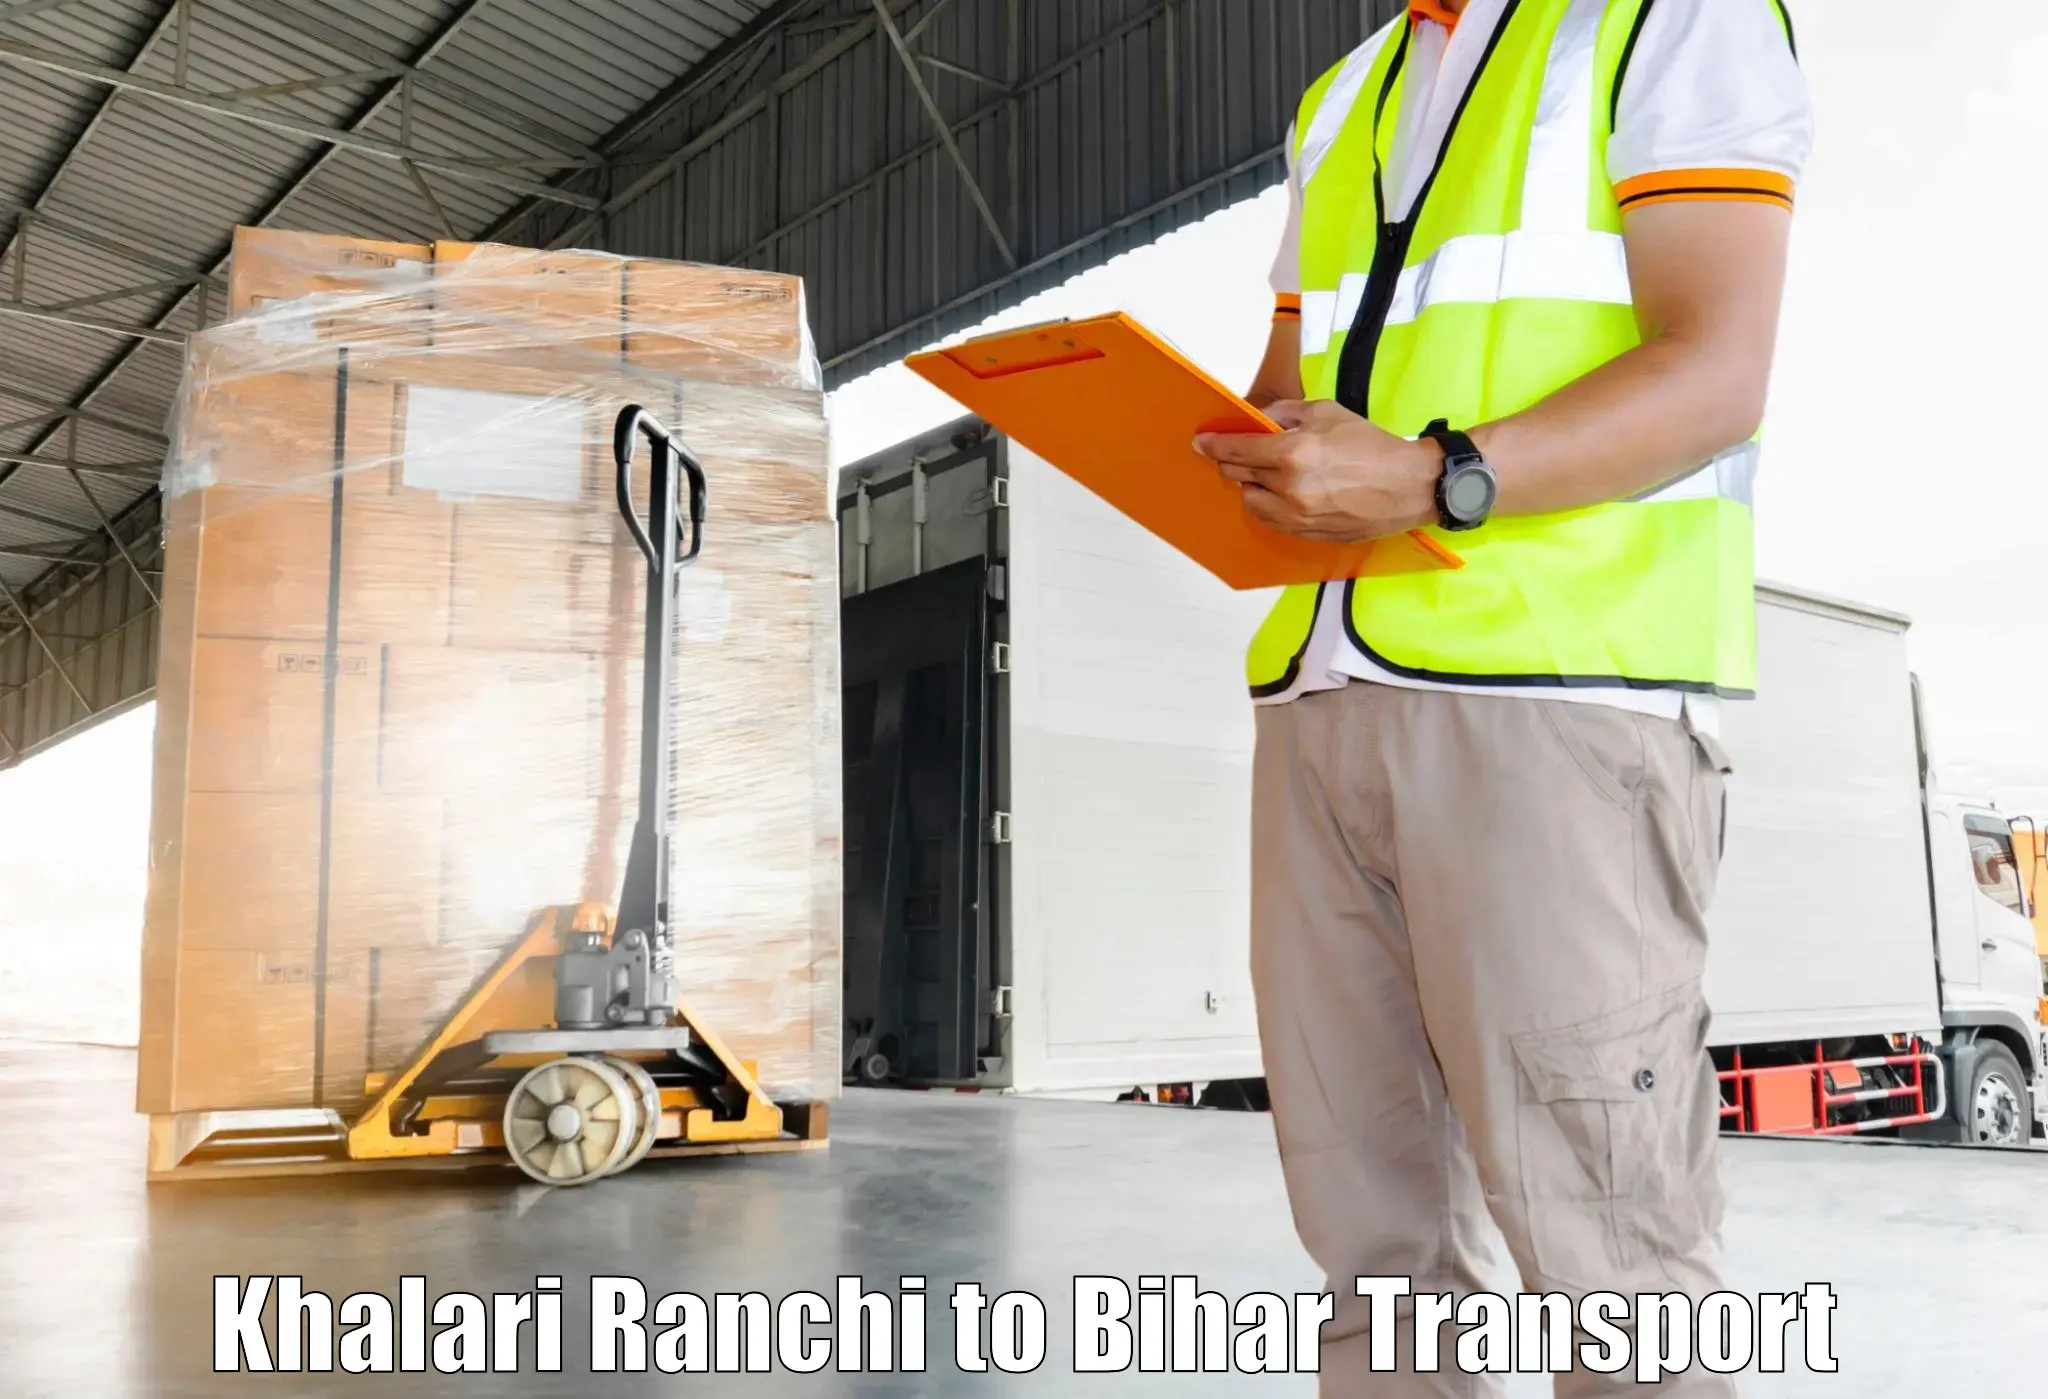 Commercial transport service Khalari Ranchi to Bakhri